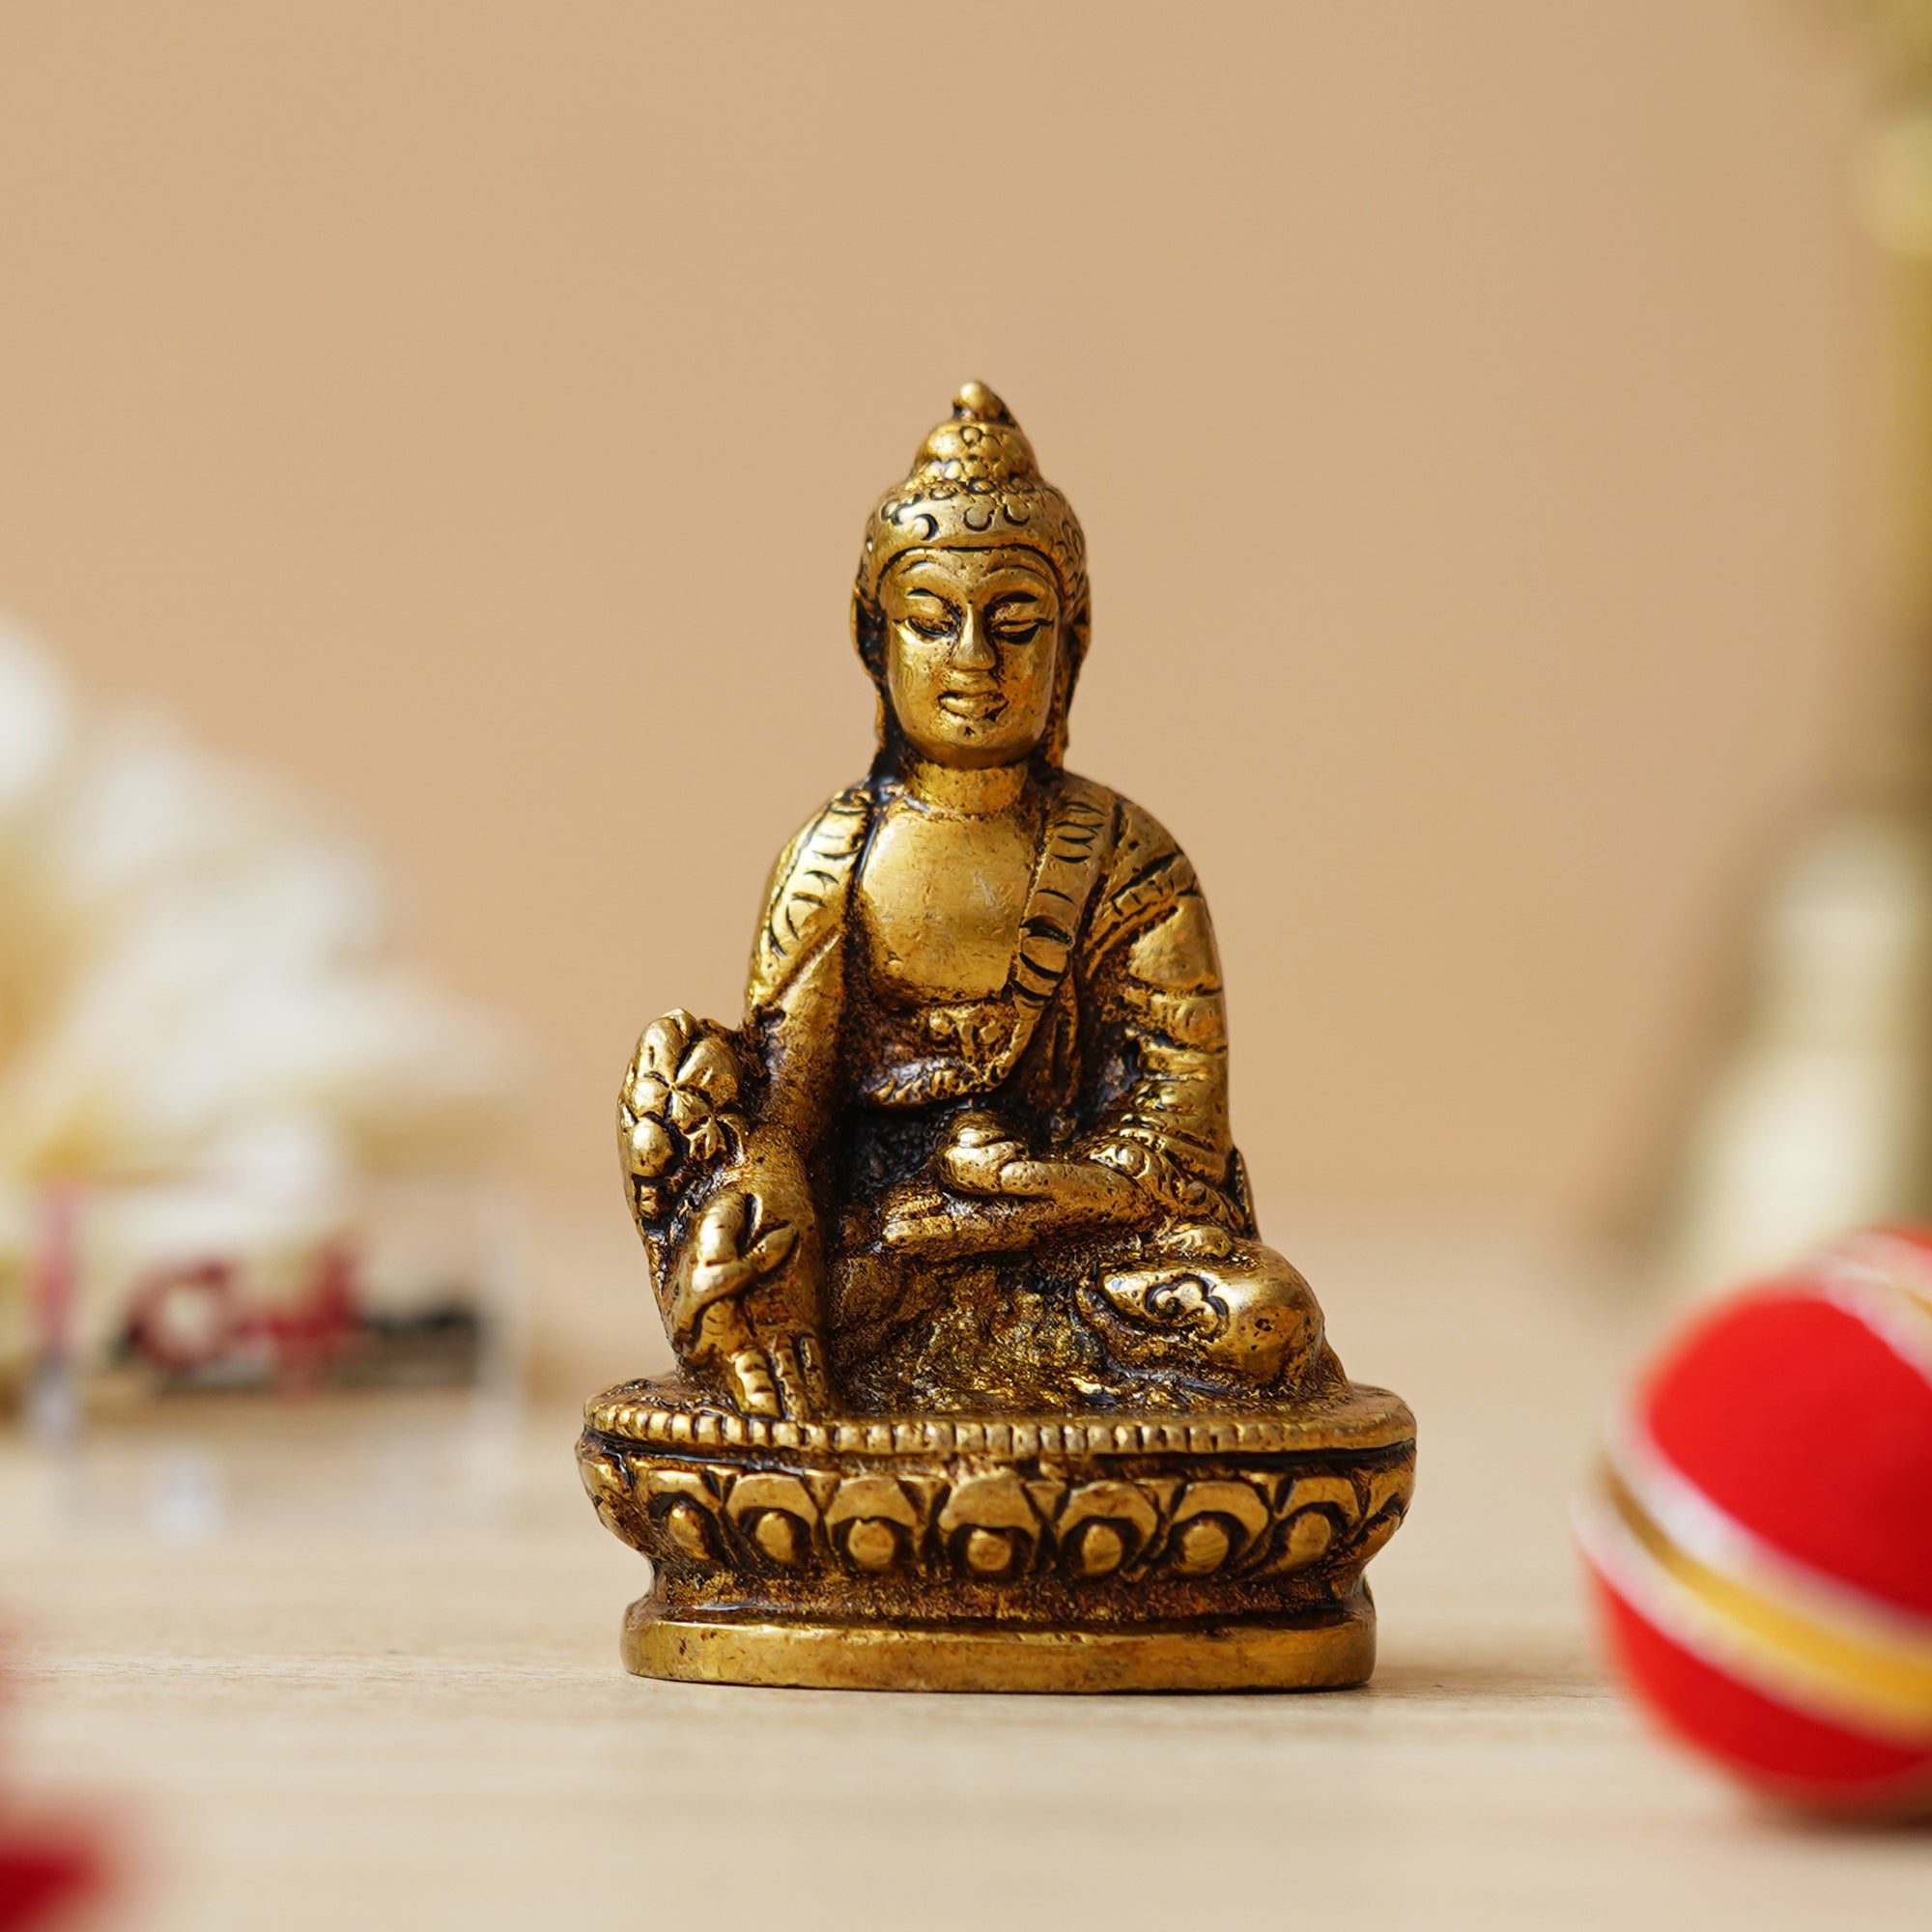 Golden Brass Lord Buddha Statue Murti Idol for Home Decor, Living Room, Office Desk, Car Dashboard - Buddha Purnima Gift to Bring Good Luck 5